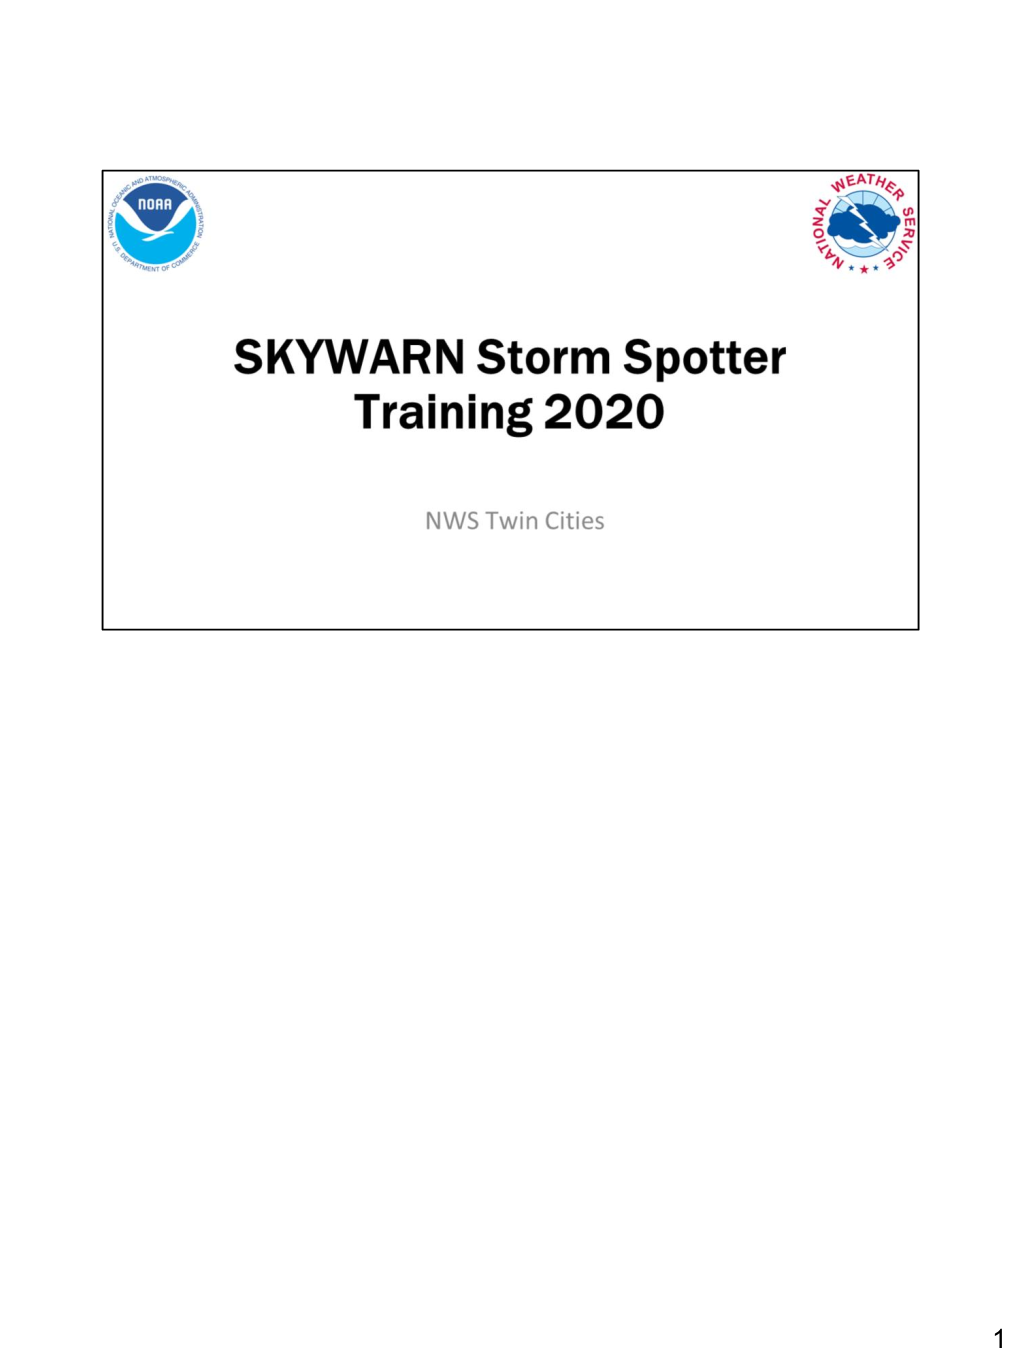 SKYWARN Storm Spotter Training 2019